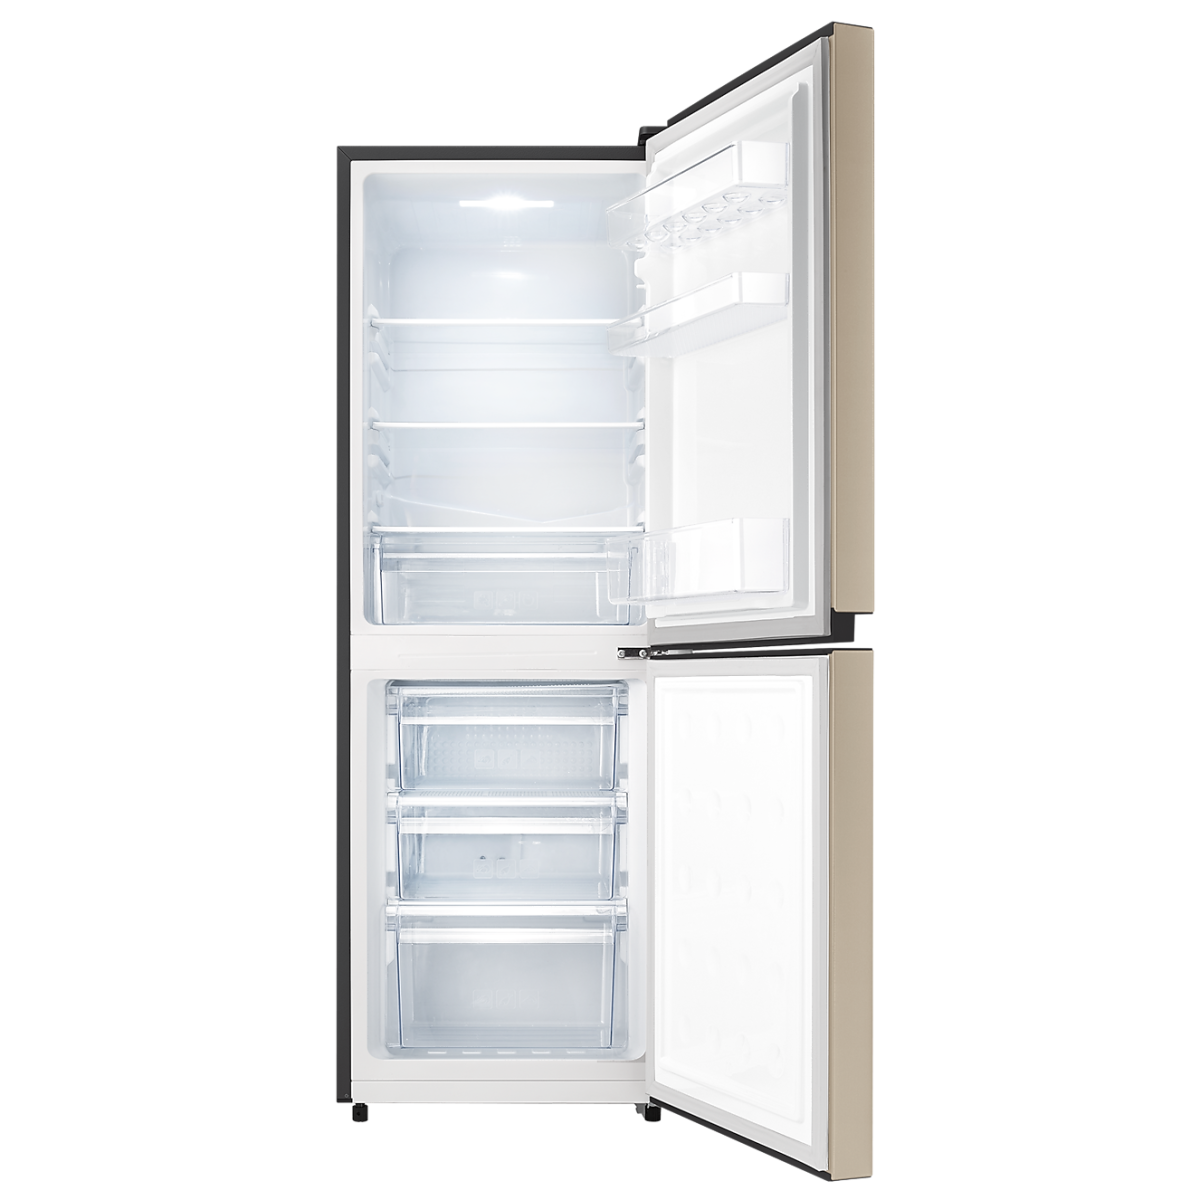 SAMSUNG 218 Liter Refrigerator with Digtial Inverter Technology RB21KMFH5SK/D3 , Best Refrigerators of Year, Top-rated Refrigerators, Refrigerator Reviews, Refrigerator Comparison, Buying a Refrigerator Guide, Refrigerator Deals and Offers